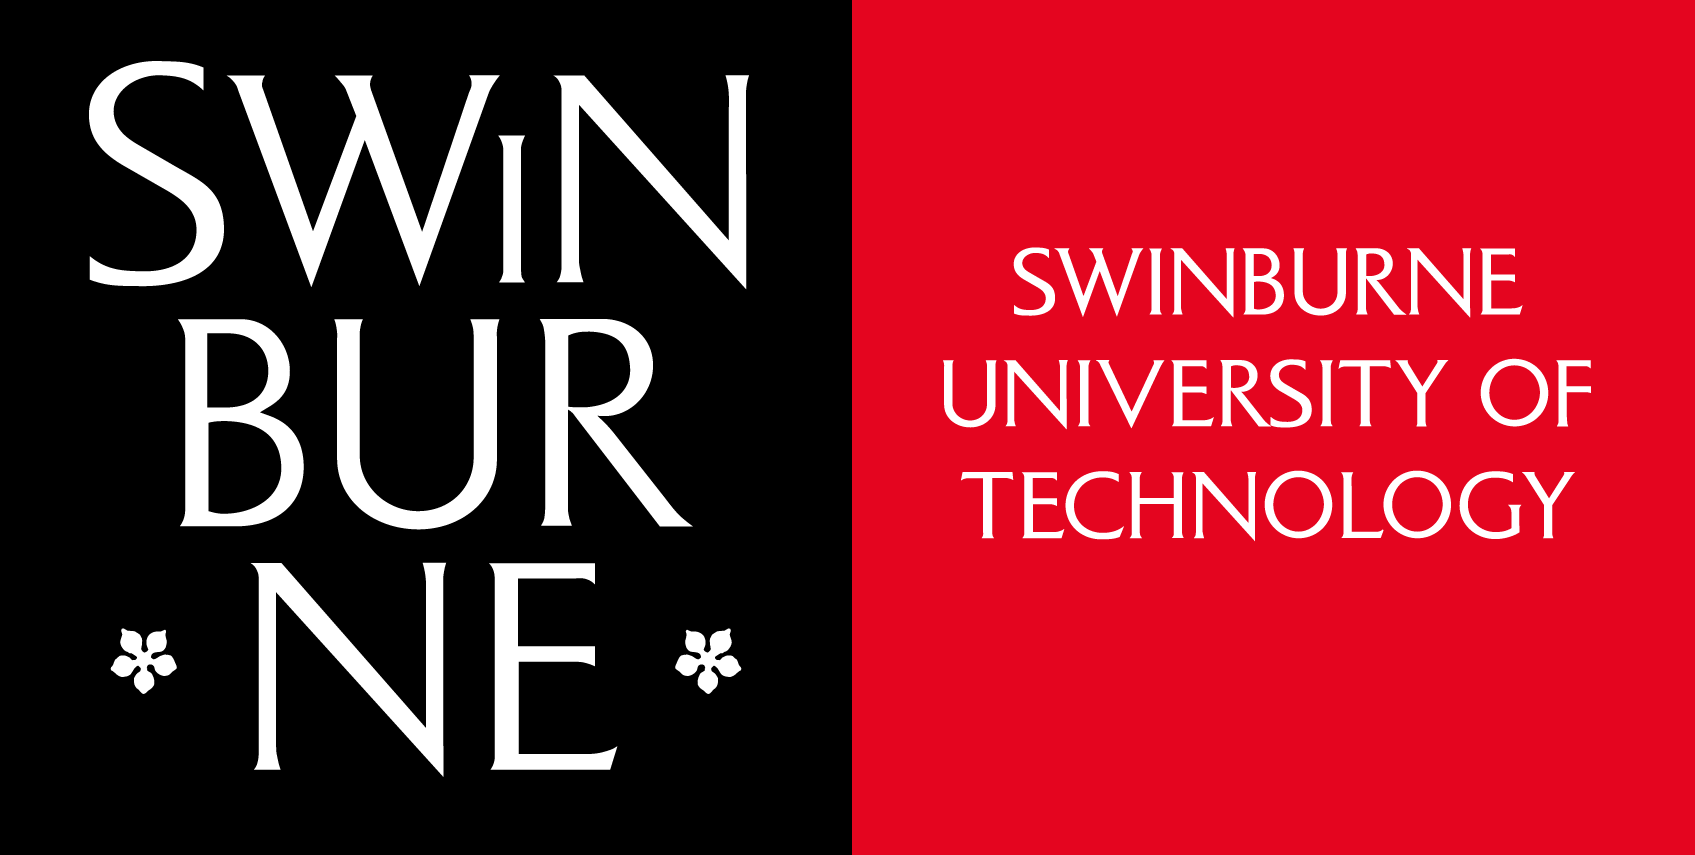 Swinburne university of technology logo